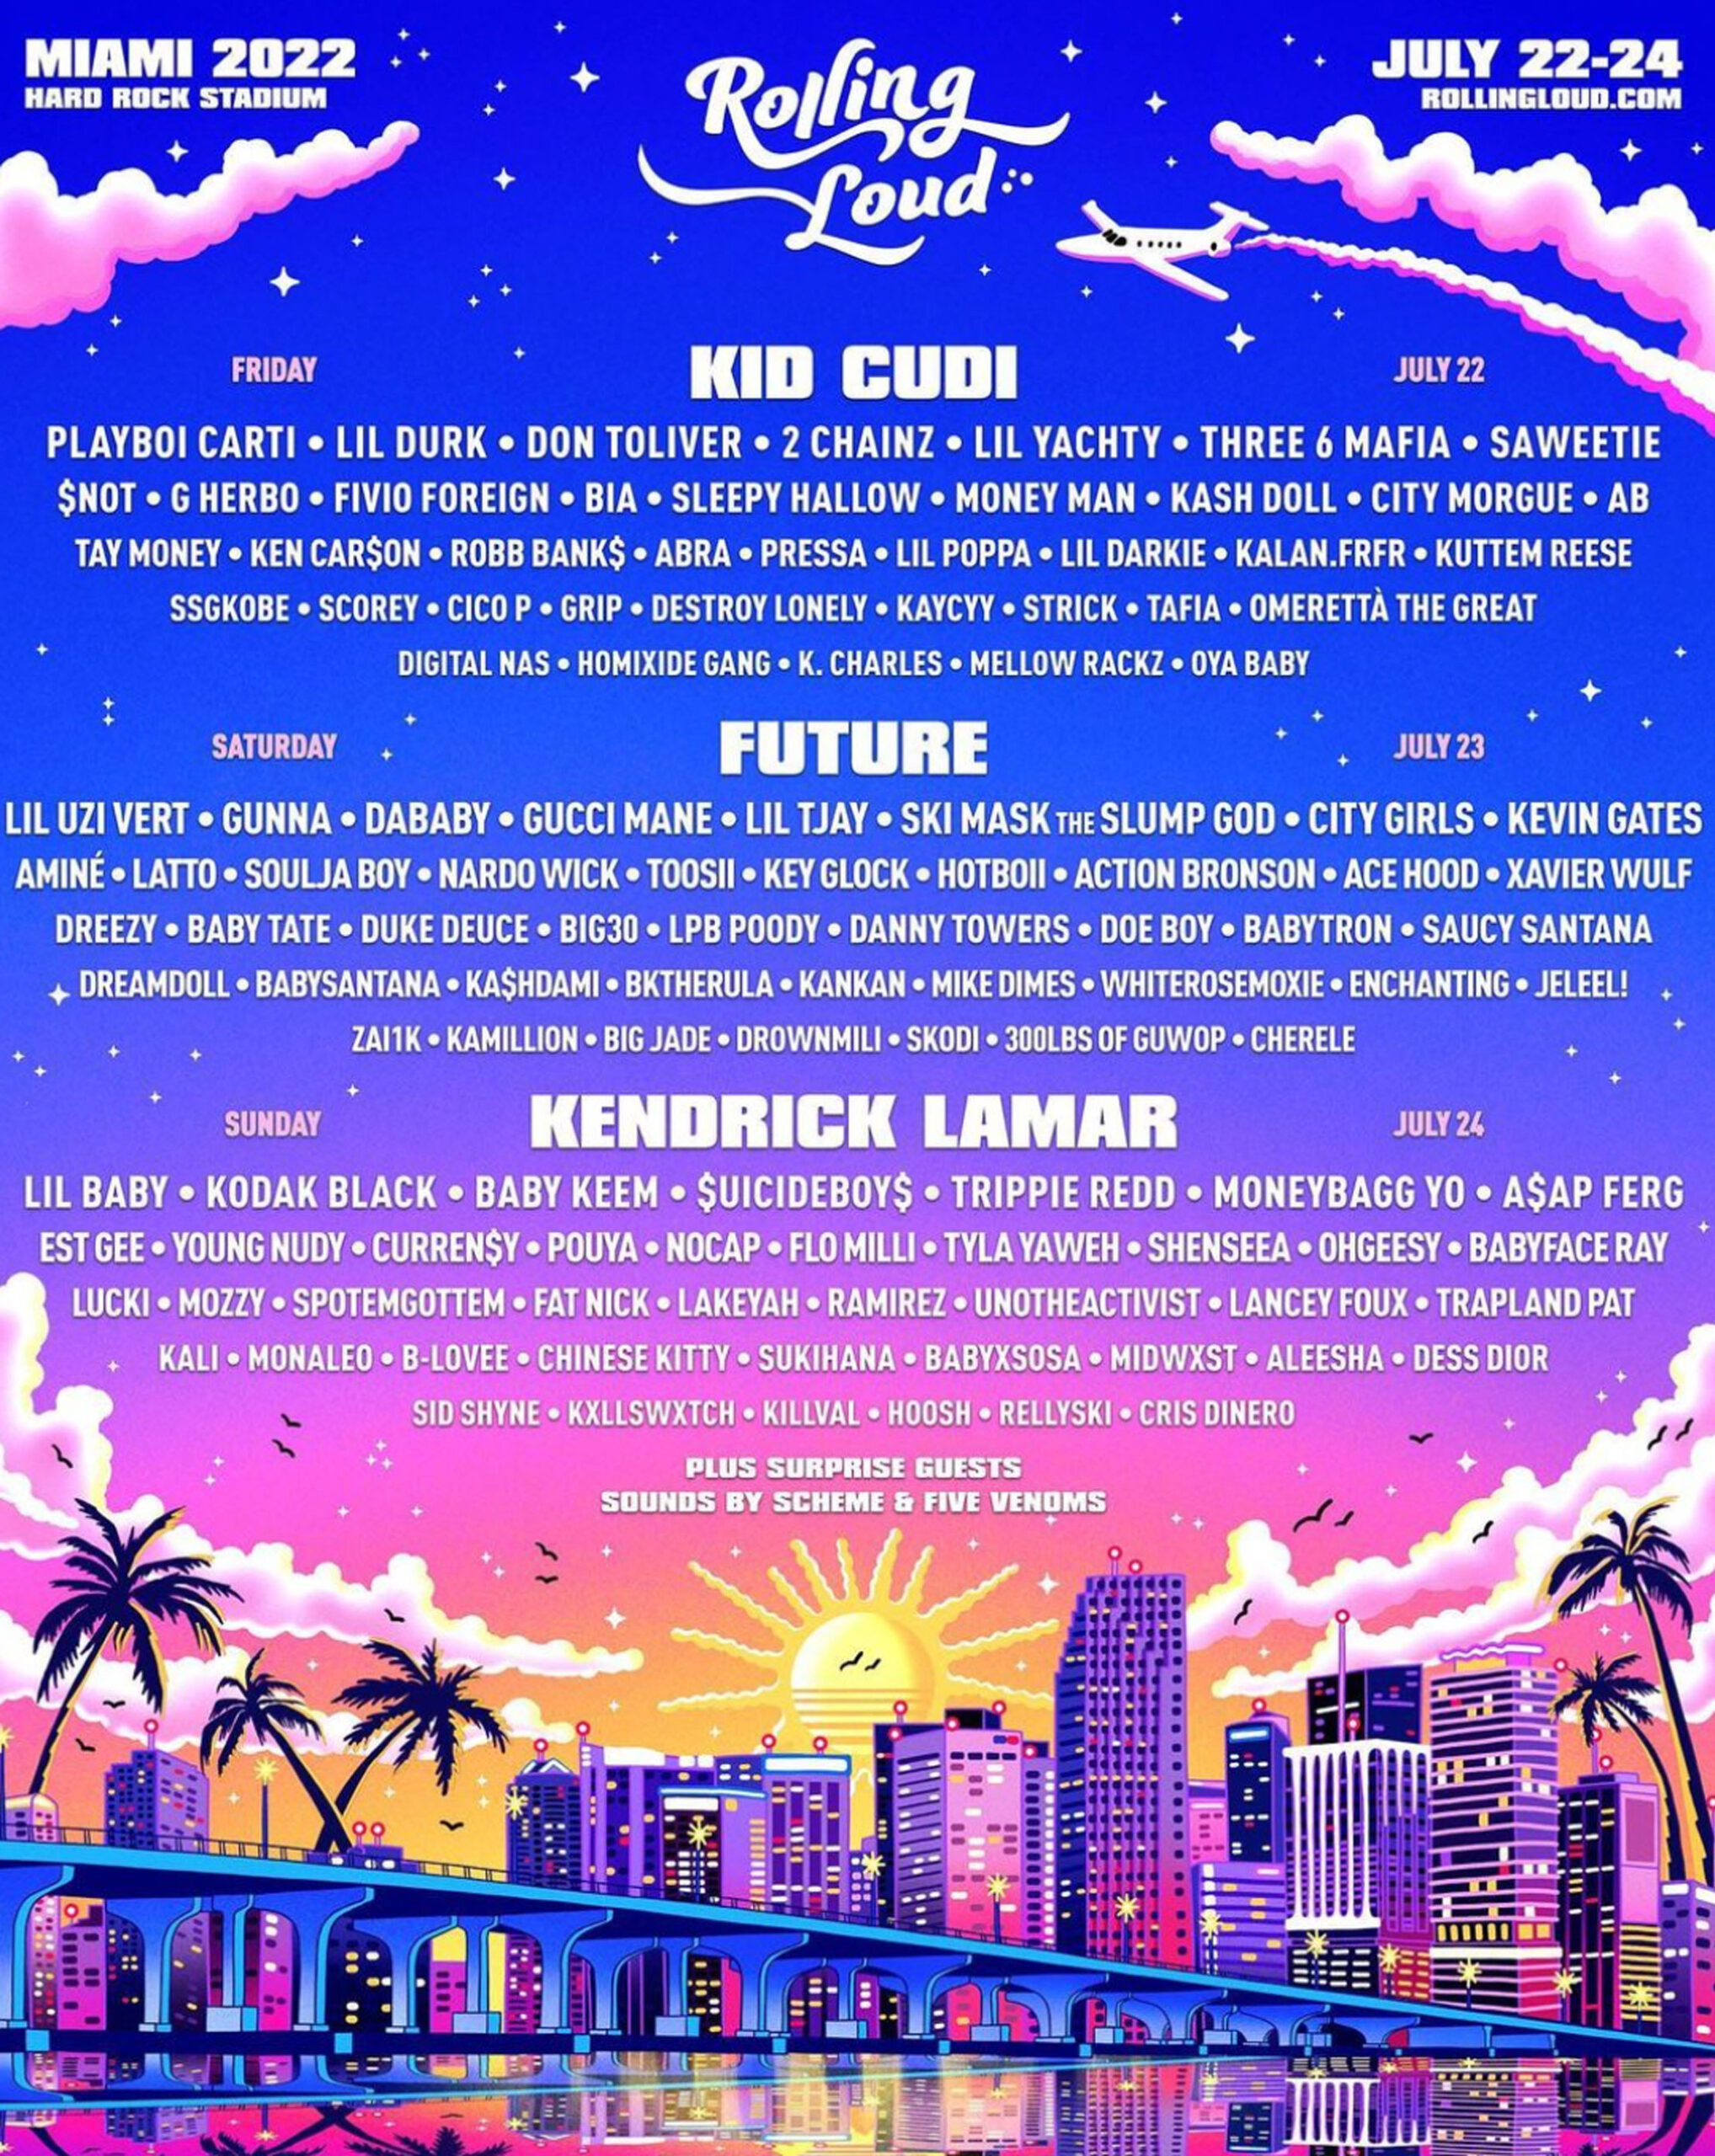 Rolling Loud Miami 2022 saweetie lil tjay Kanye West Kid Cudi Pete Davidson Kim Kardashian Timothee Chalamet Lil Durk video